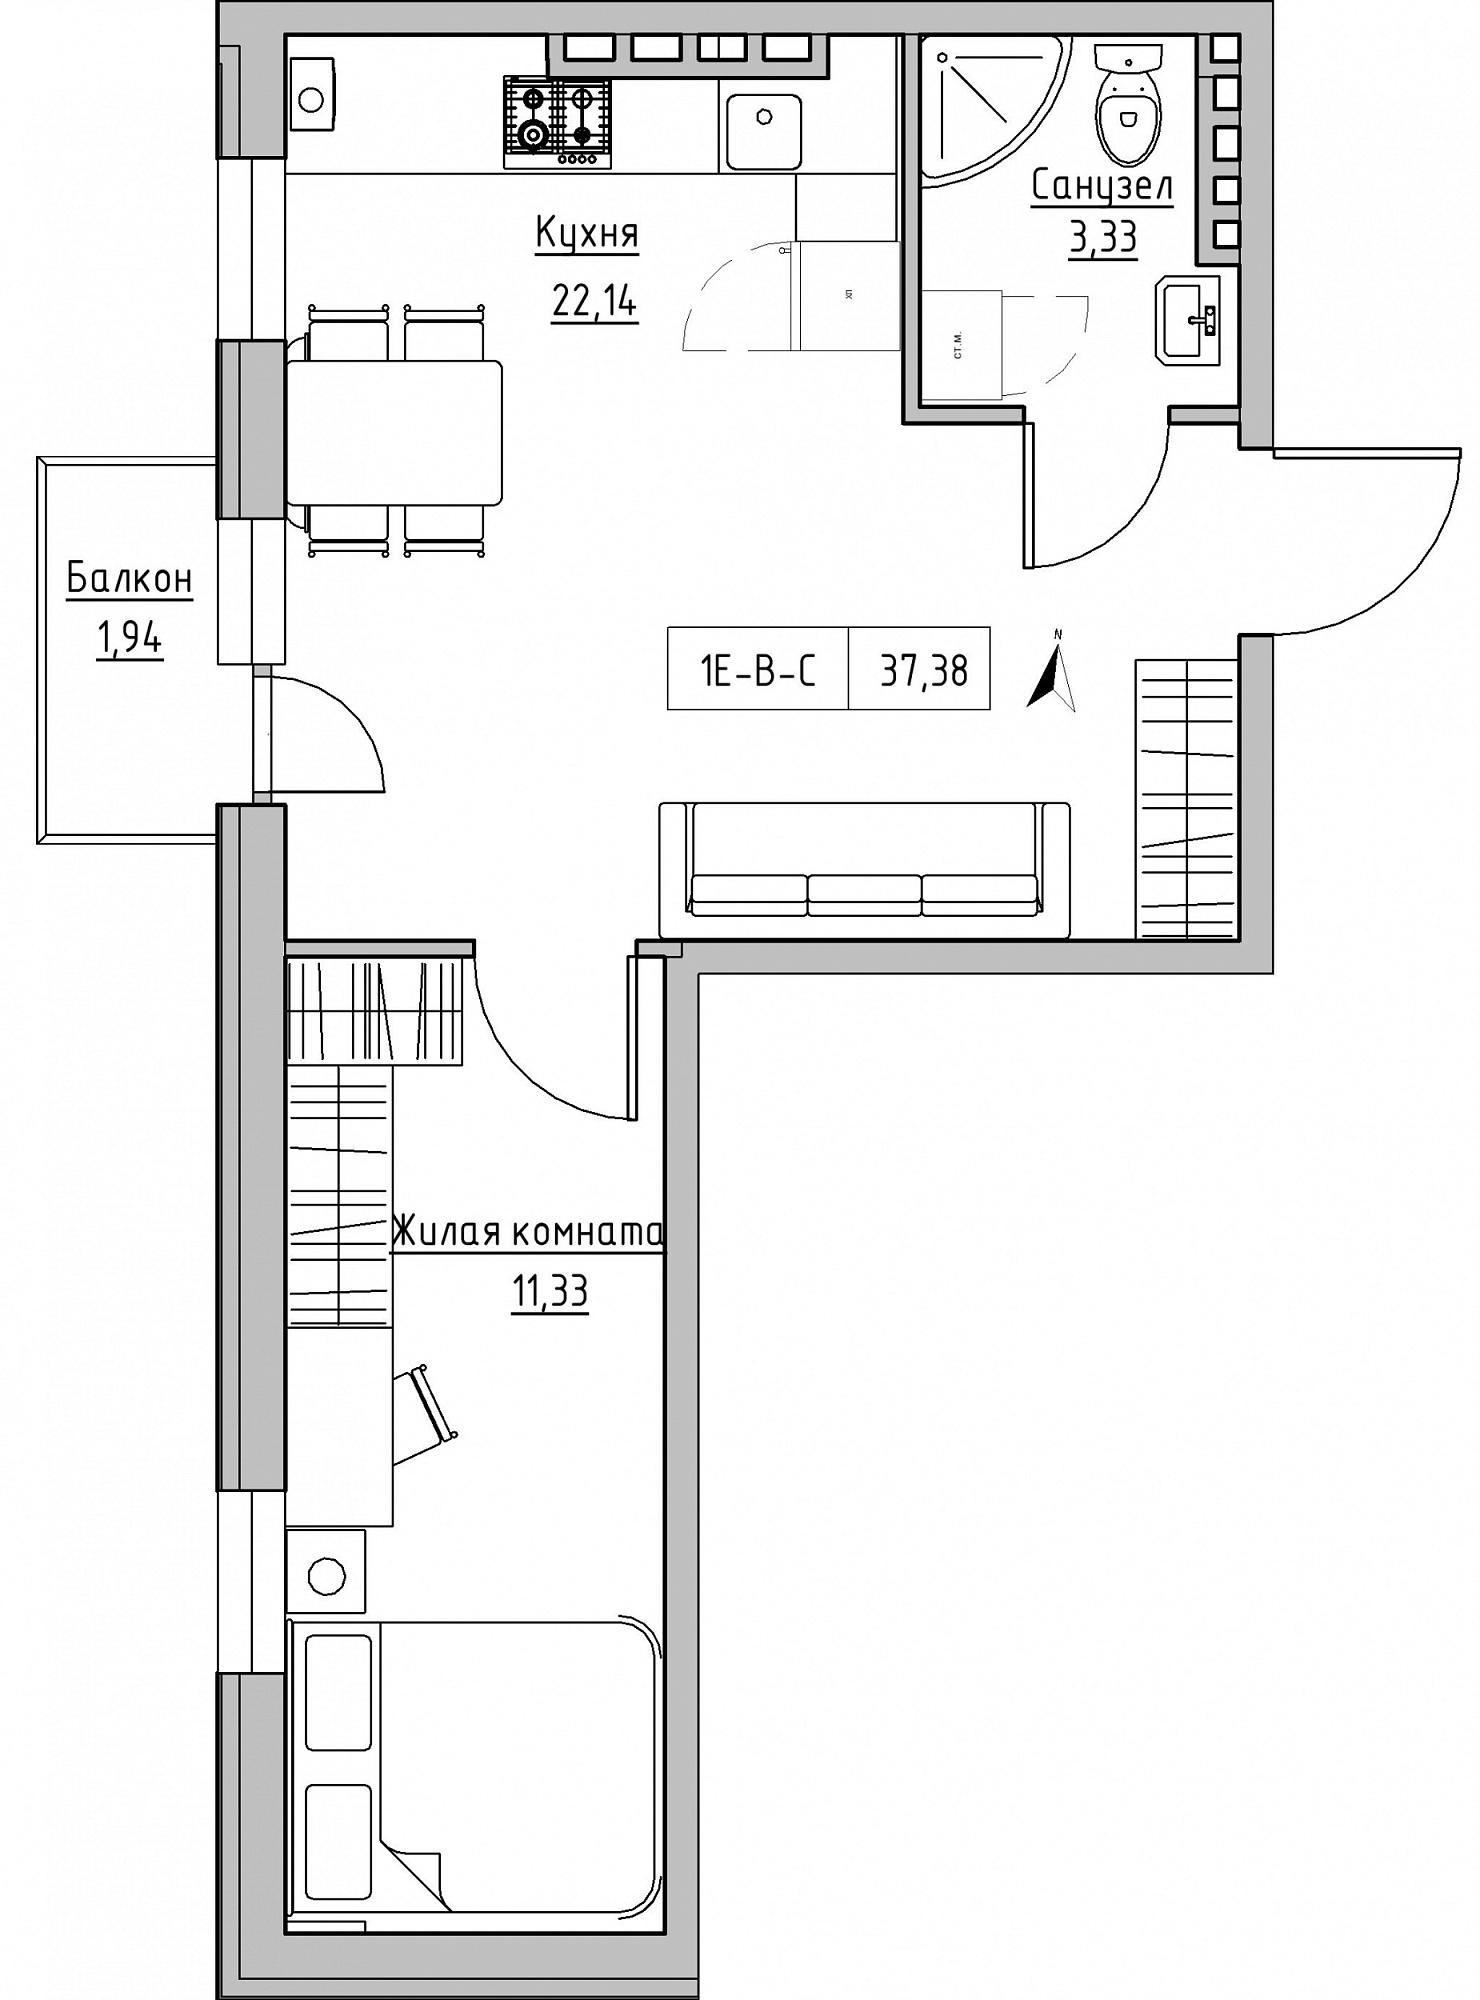 Planning 1-rm flats area 37.38m2, KS-024-04/0010.